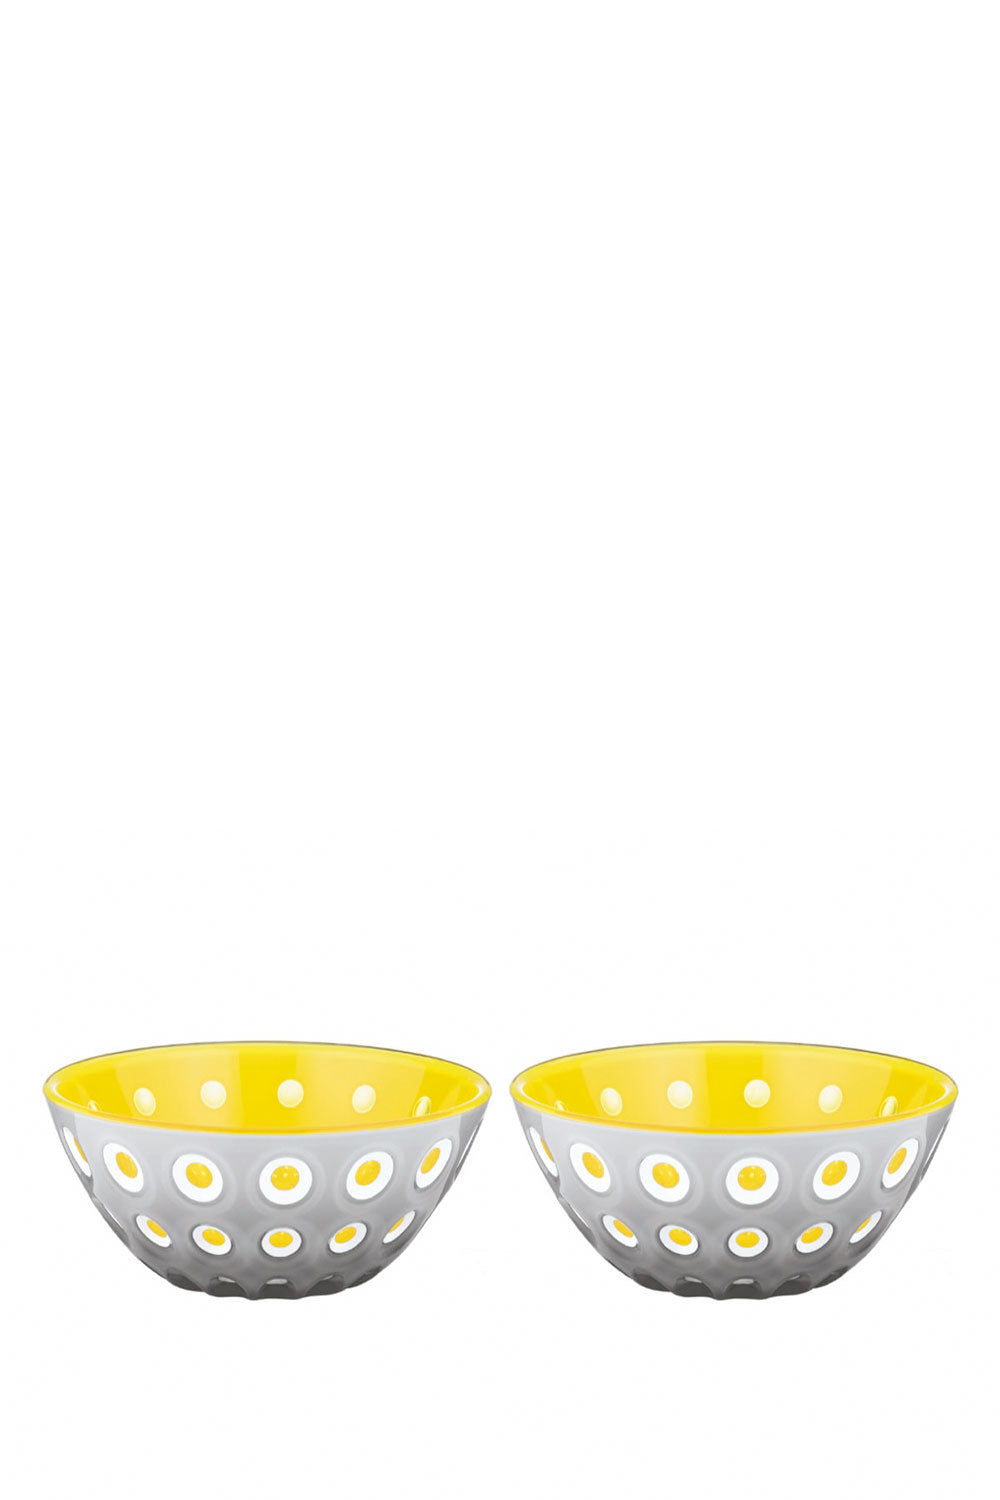 Murrine Grey & Yellow Bowls Set Of 2, 12 cm